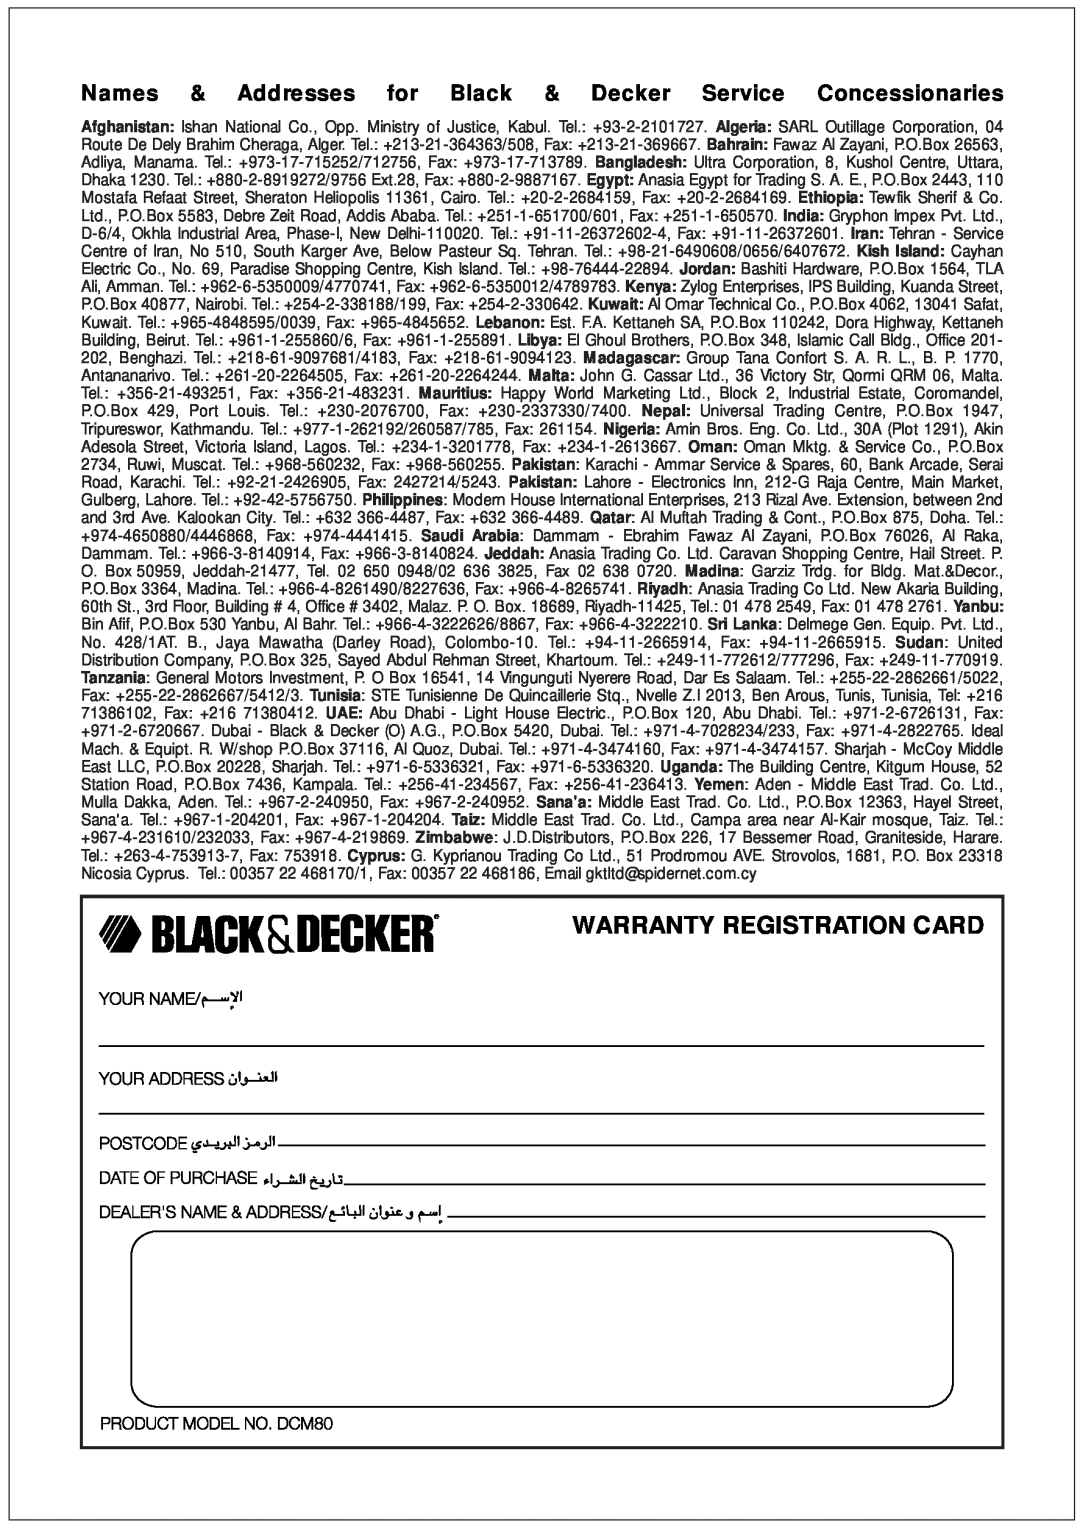 Black & Decker DCM80 manual Warranty Registration Card, Names & Addresses for Black & Decker Service Concessionaries 